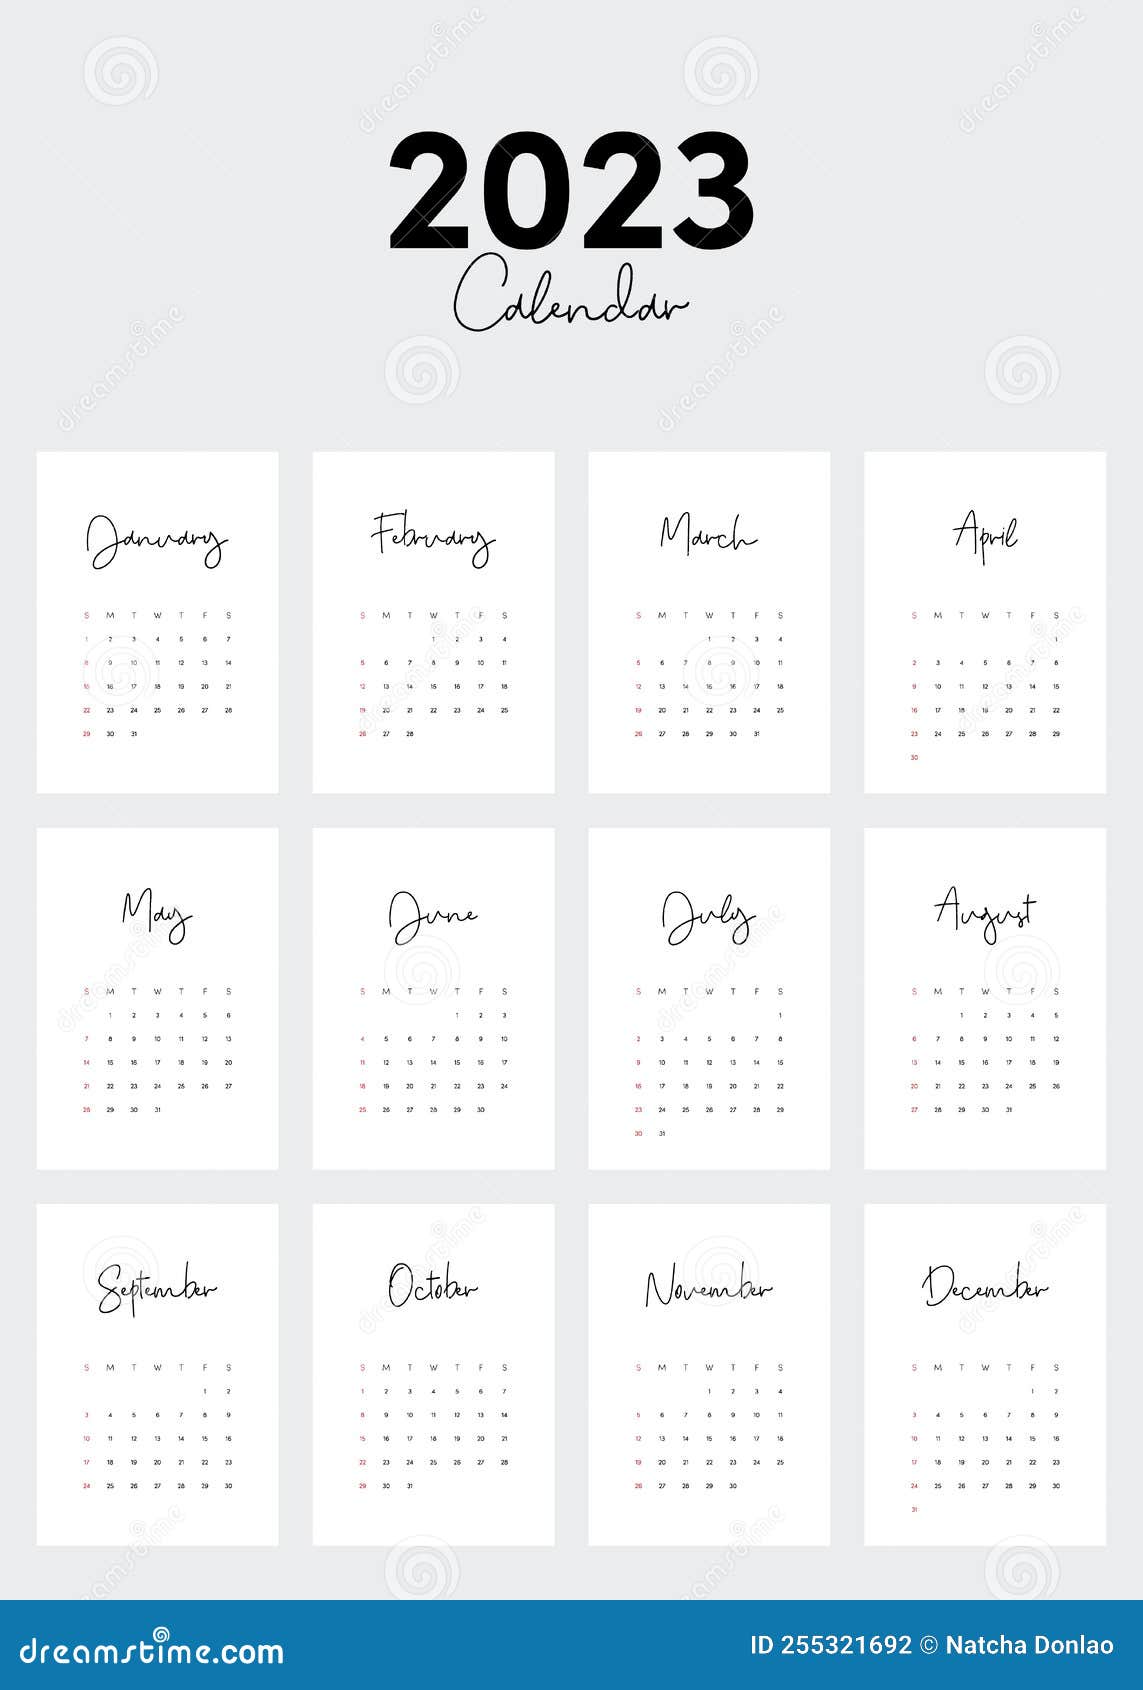 2023 printable monthly calendar template design week starts on sunday